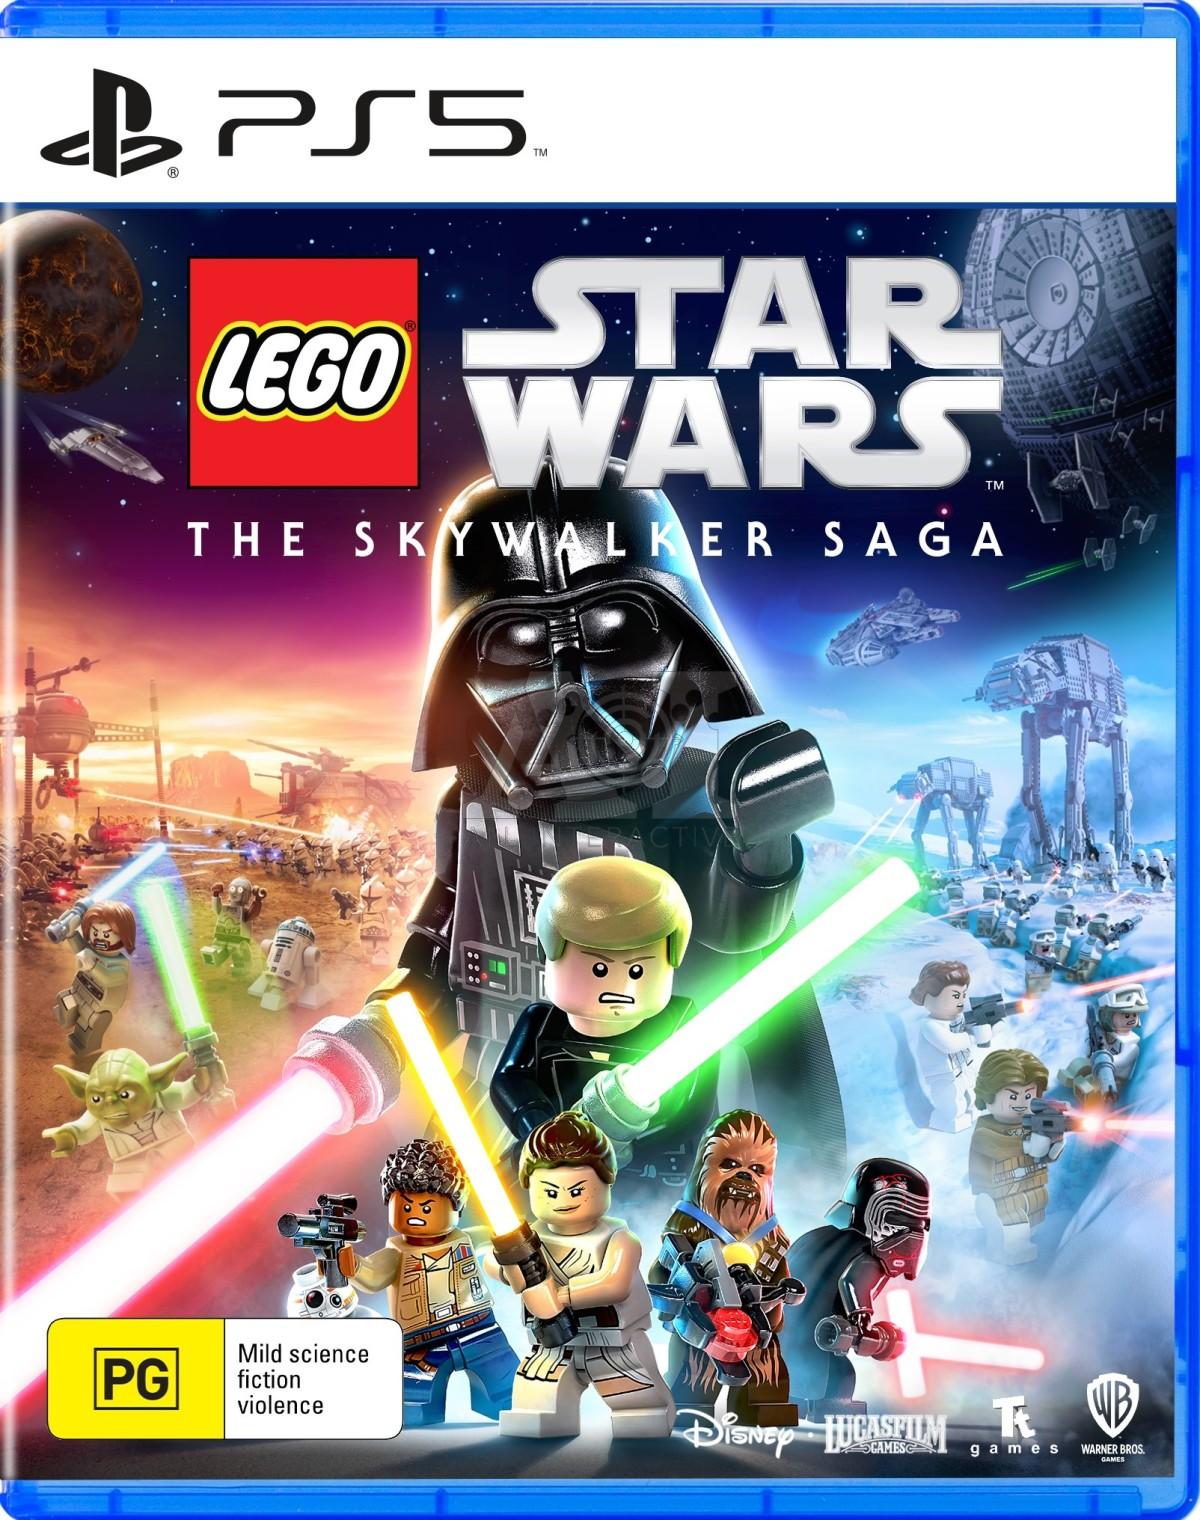 PS5 LEGO STAR WARS THE SKYWALKER SAGA